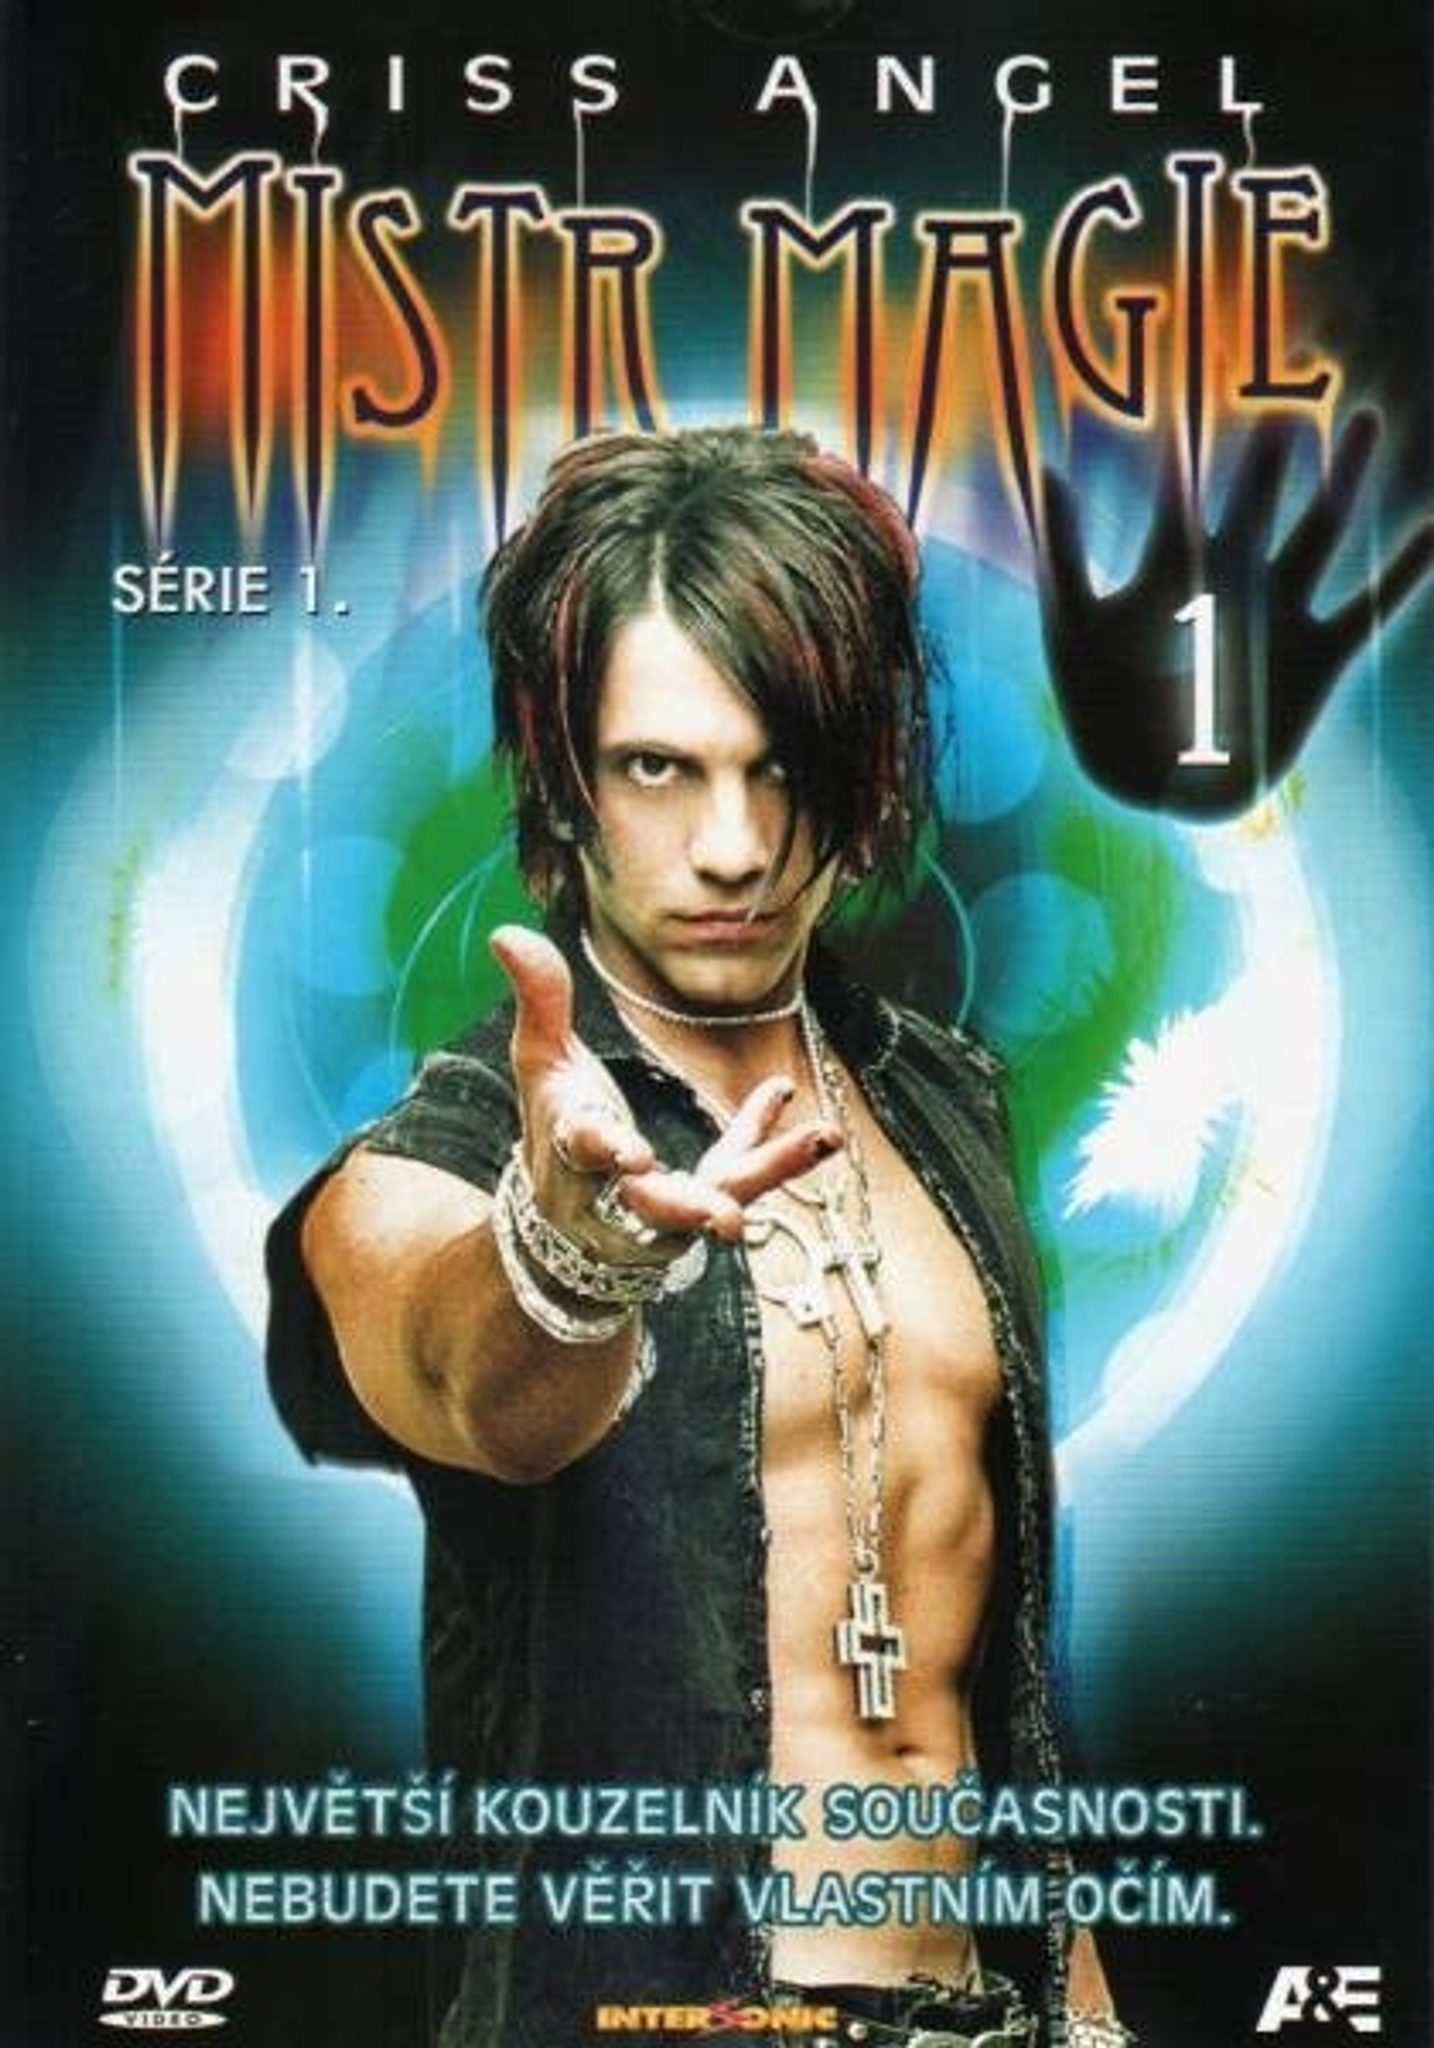 DVD Criss Angel Mistr magie srie 1 1